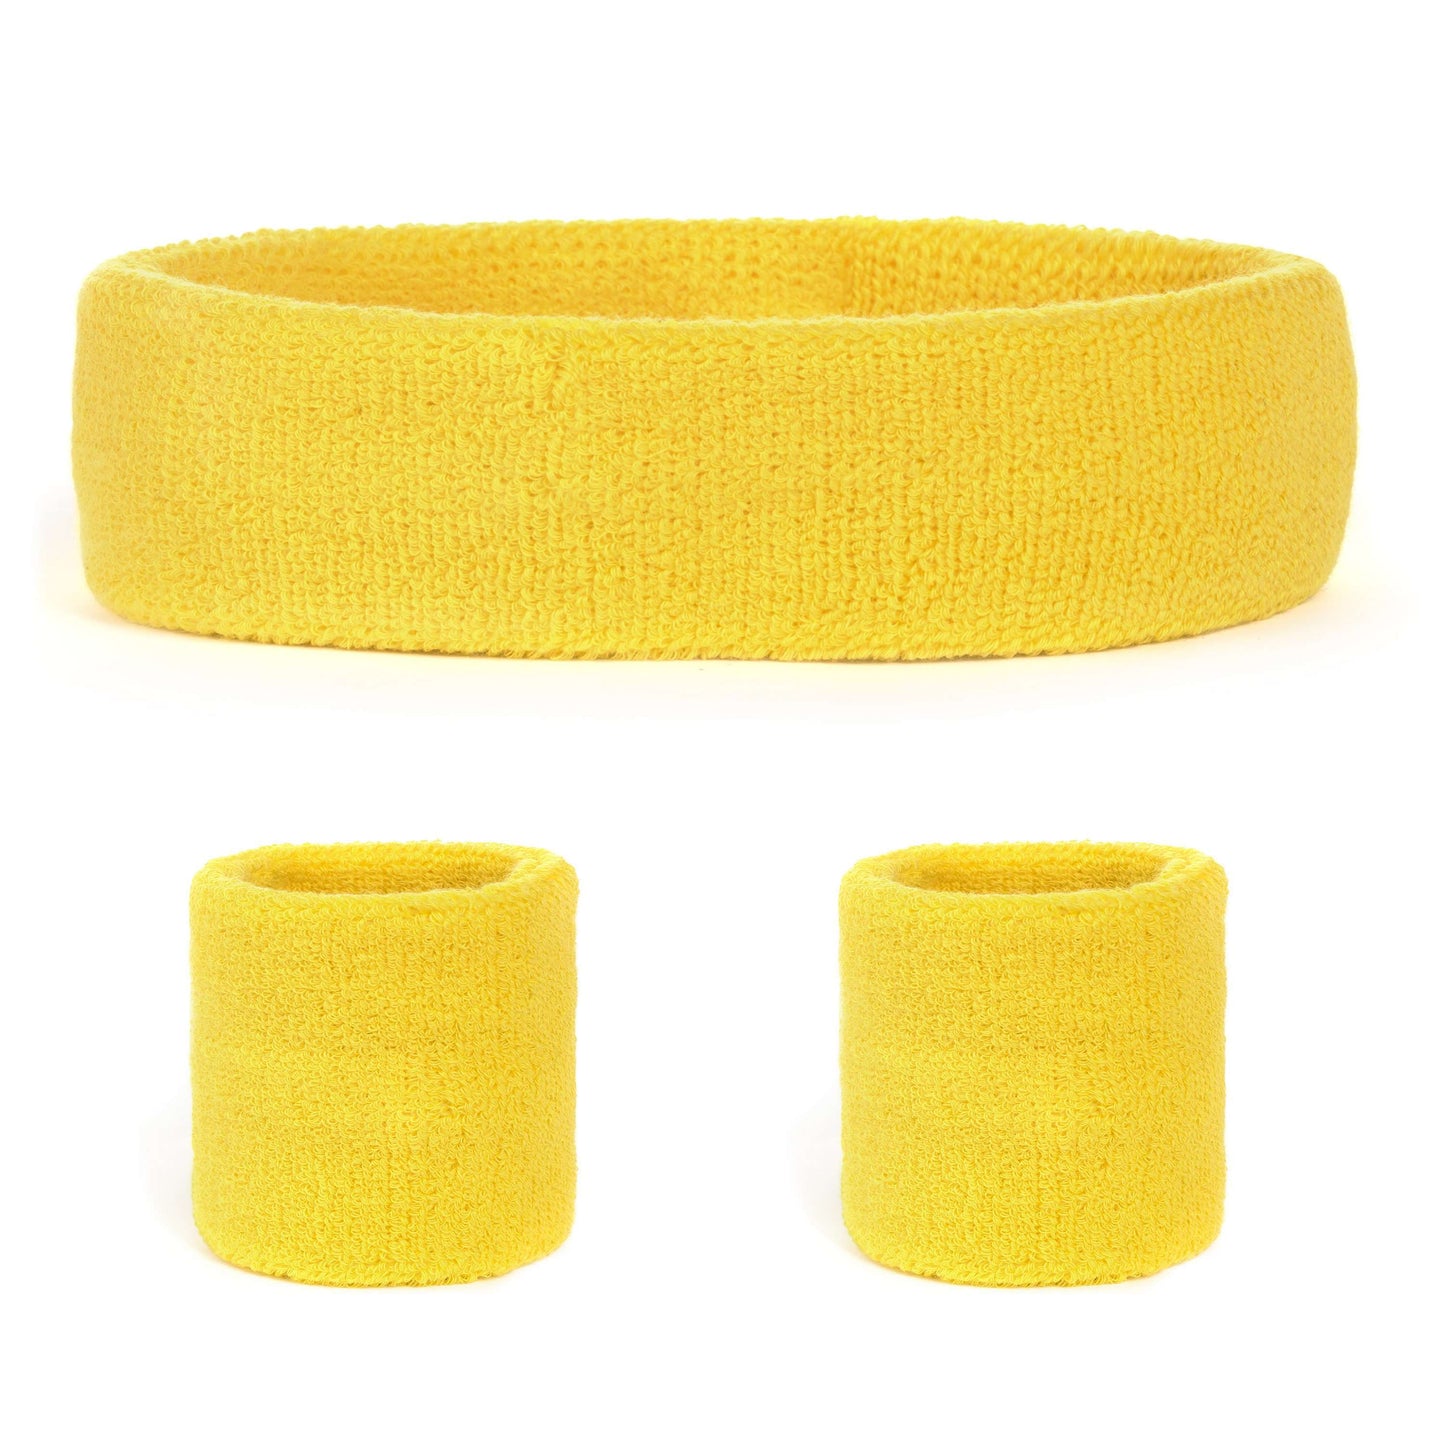 Suddora Sweatband Set (1 Headband & 2 Wristbands) - Neon Yellow